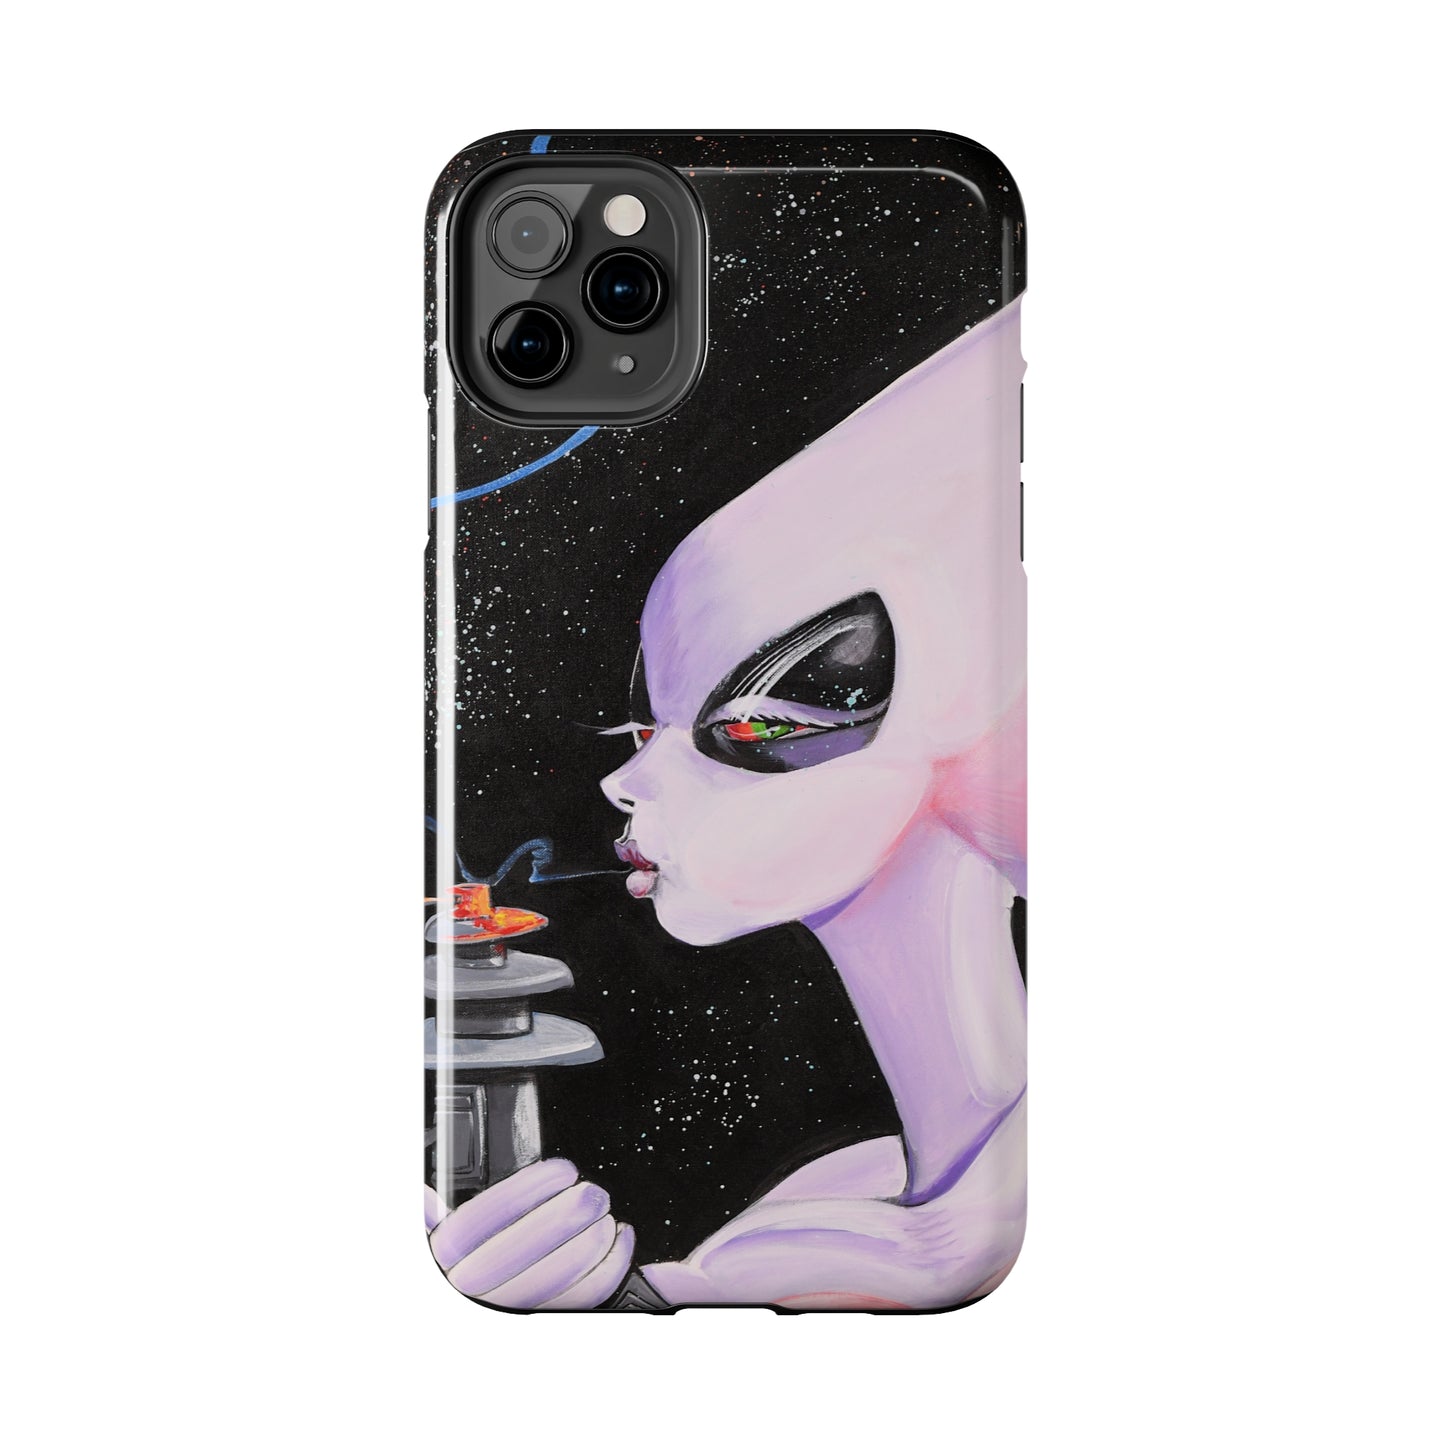 Alien Lady Collection Case Mate Tough Phone Cases